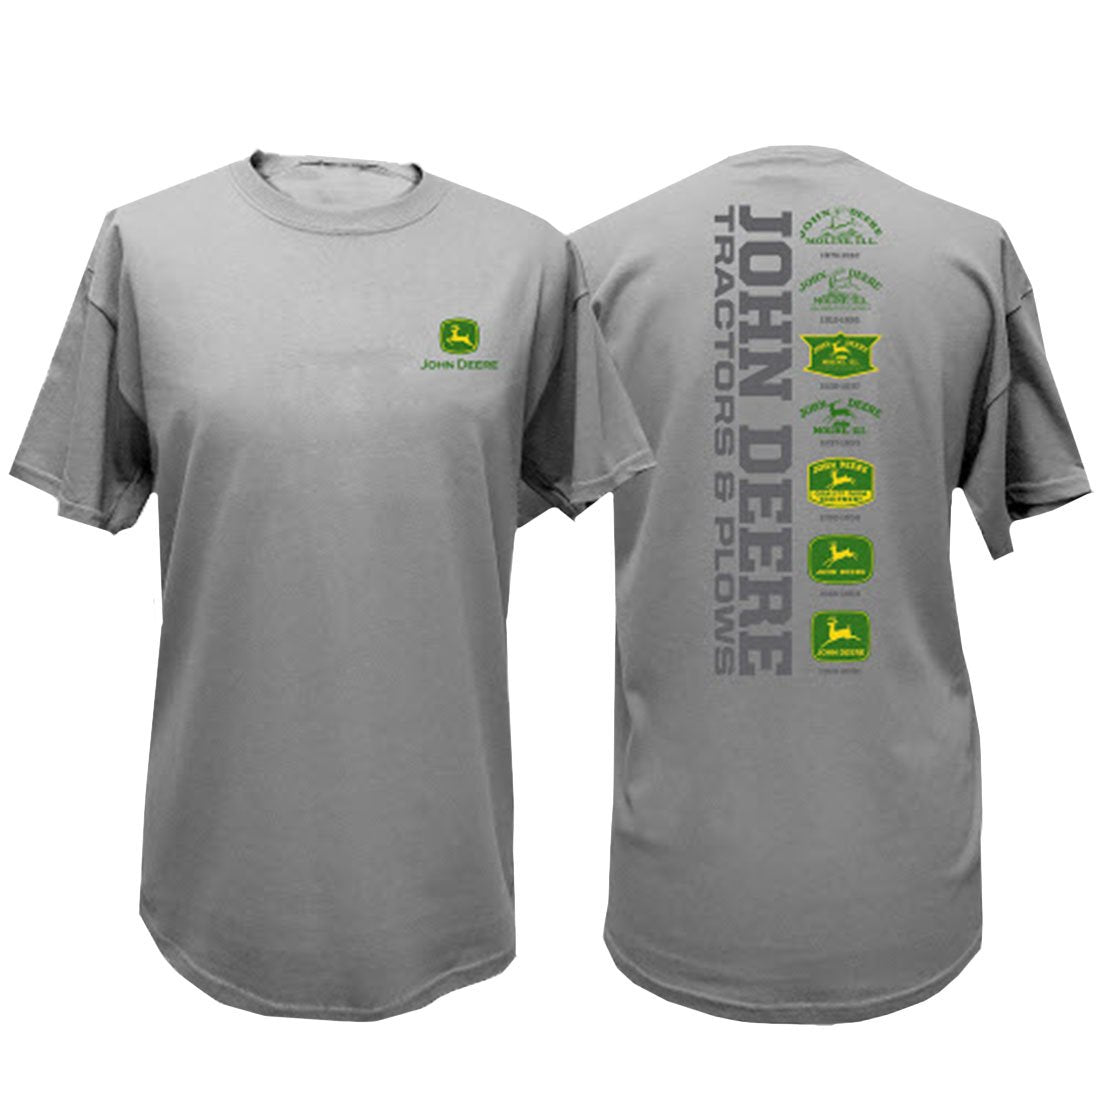 John Deere Men's Grey Historical Logos T-Shirt (Medium) - LP67110